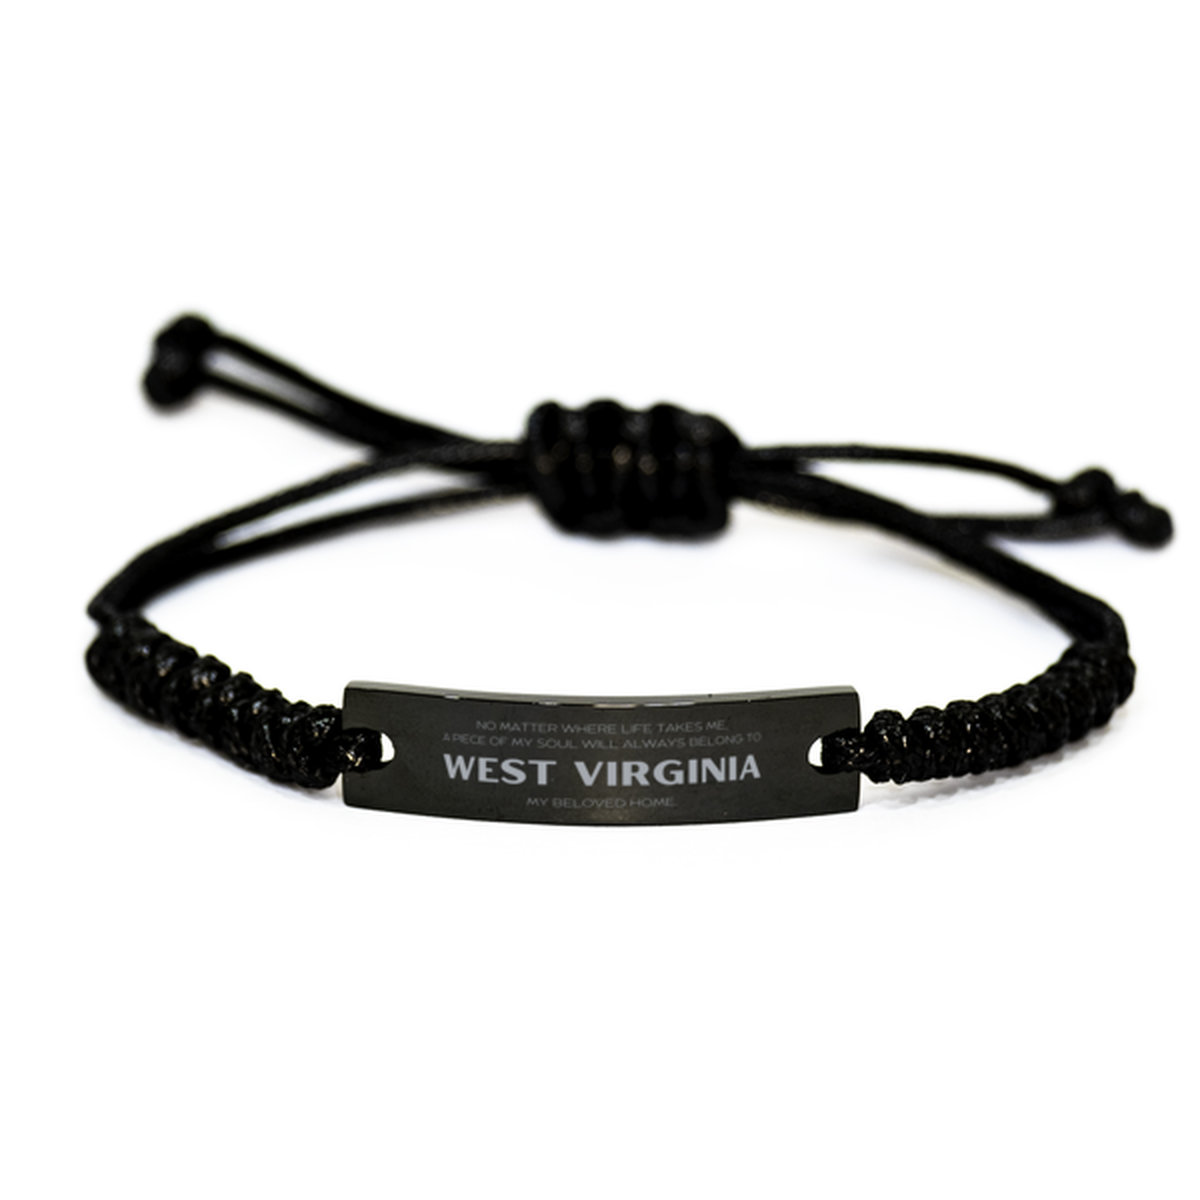 Love West Virginia State Gifts, My soul will always belong to West Virginia, Proud Black Rope Bracelet, Birthday Unique Gifts For West Virginia Men, Women, Friends